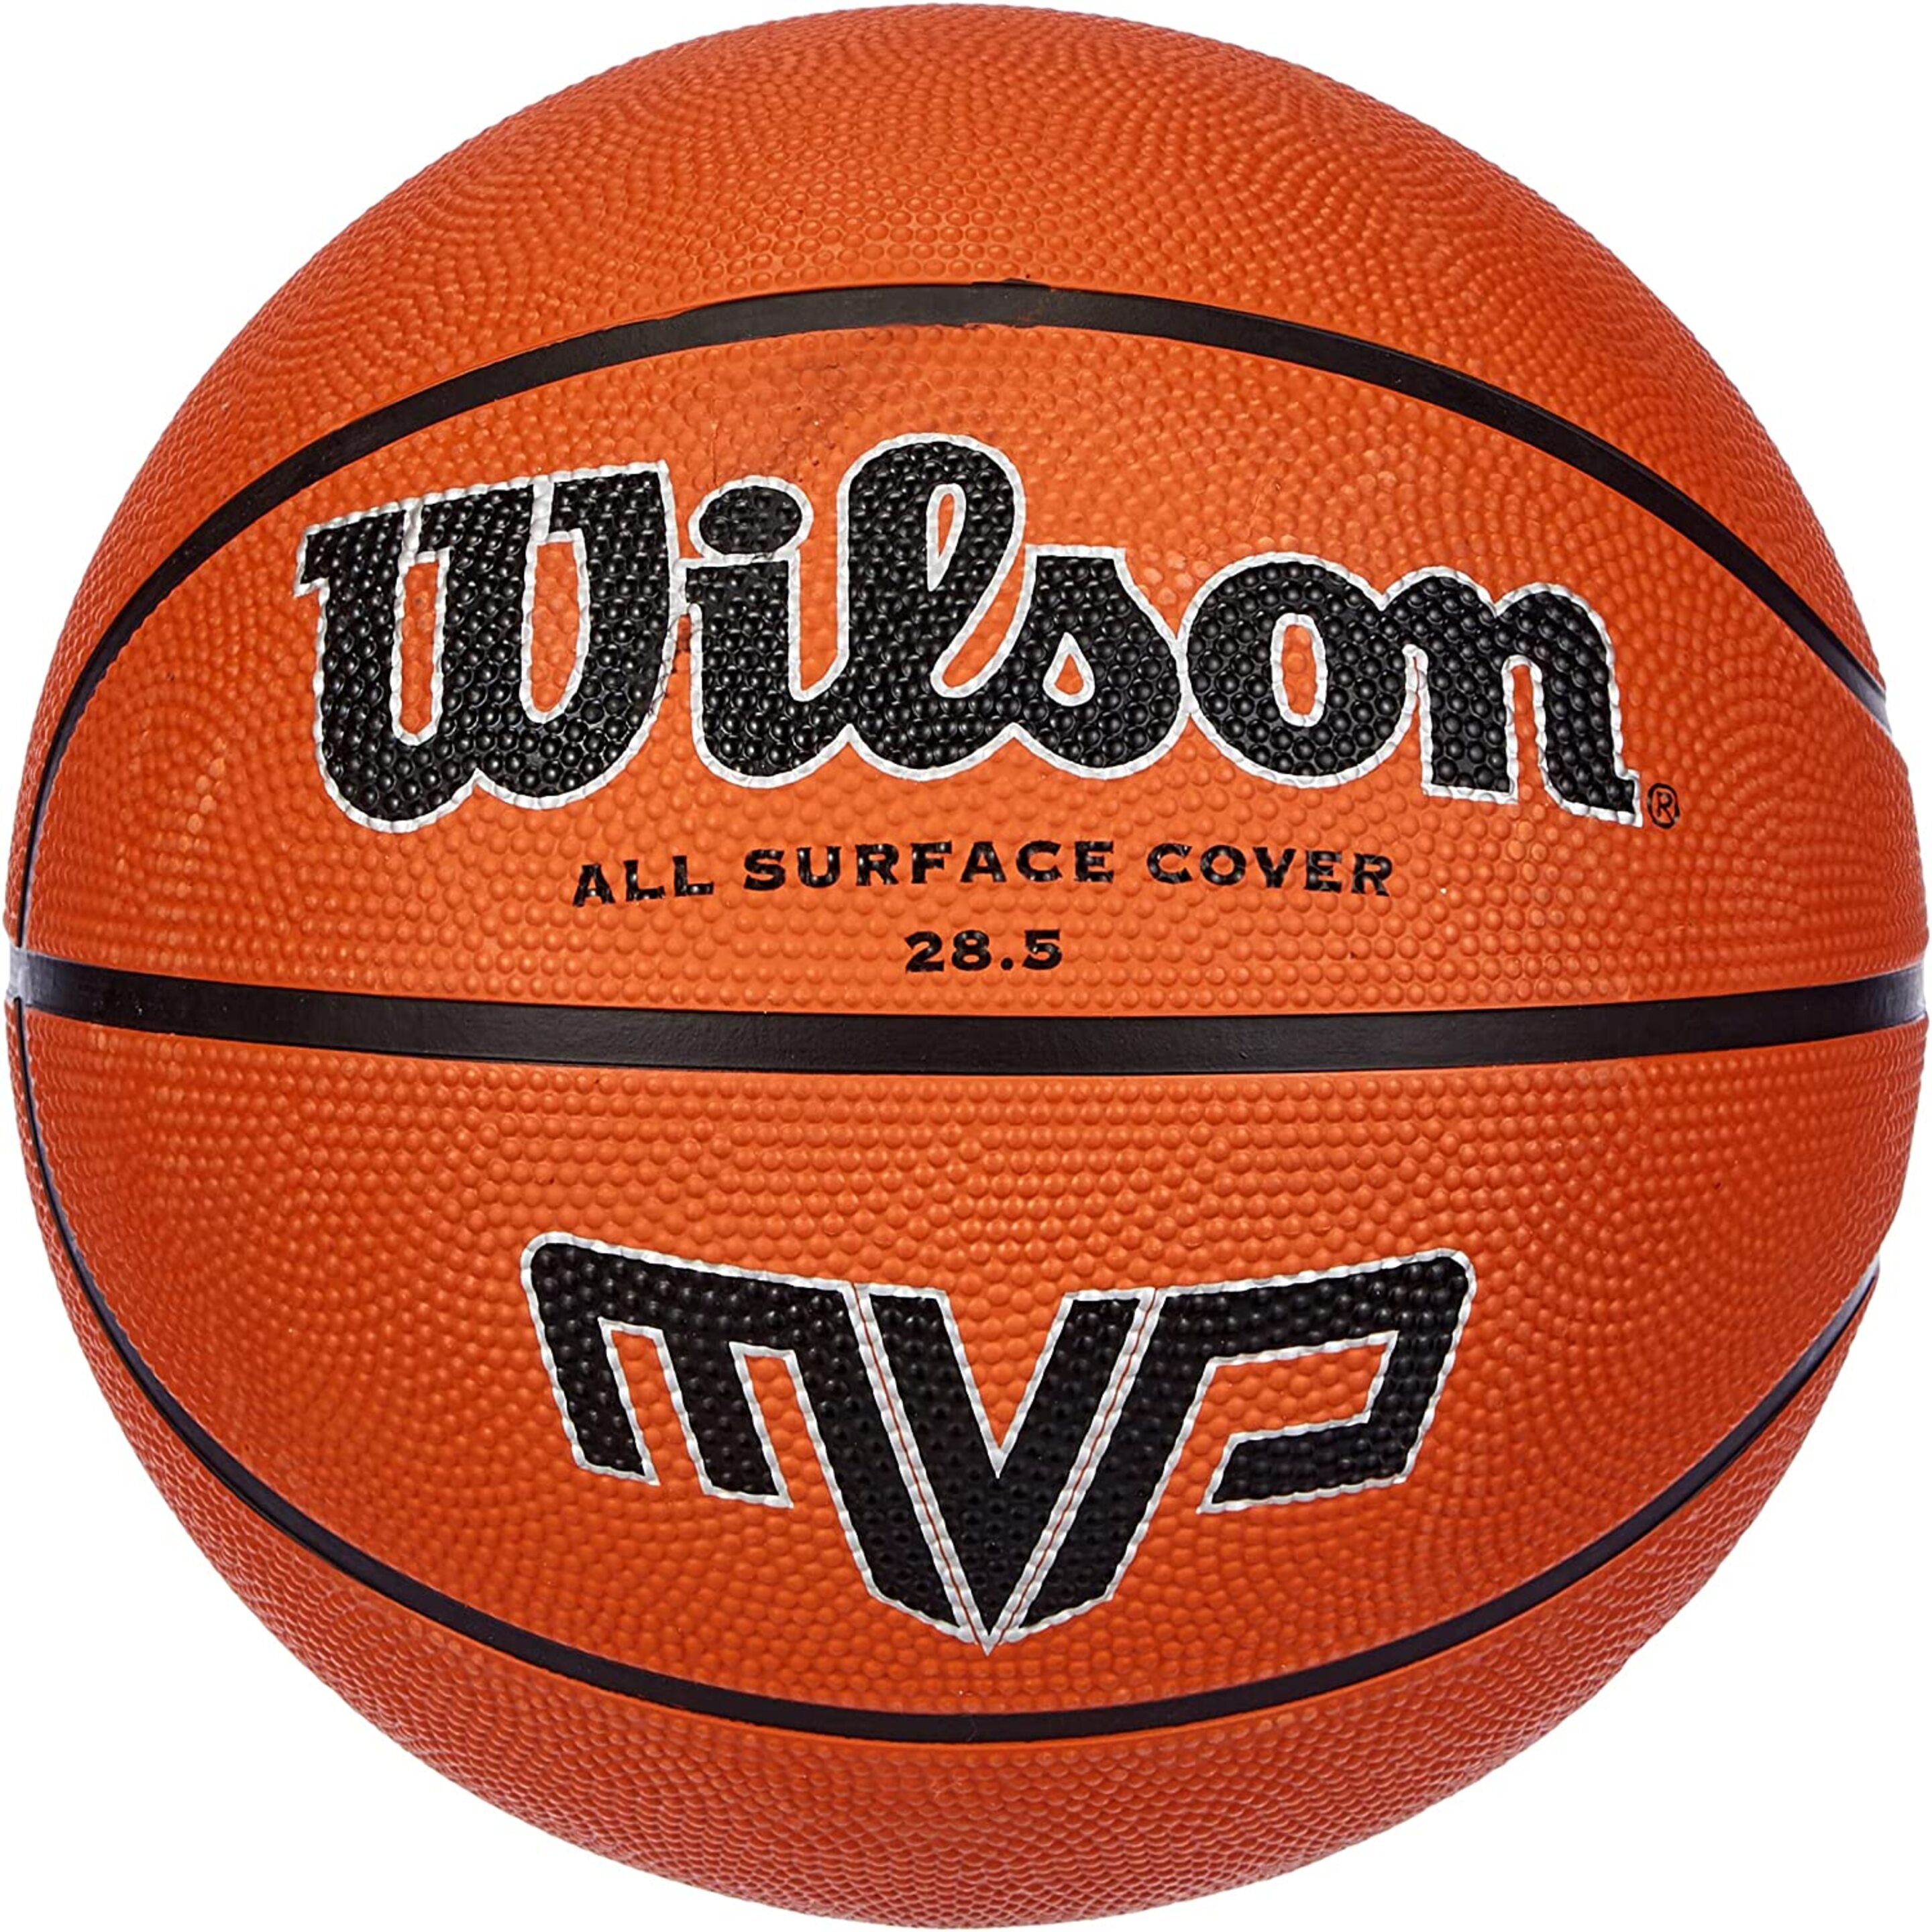 Balon Baloncesto Mvp 6 - Marron - Tamaño 6 femenino.  MKP